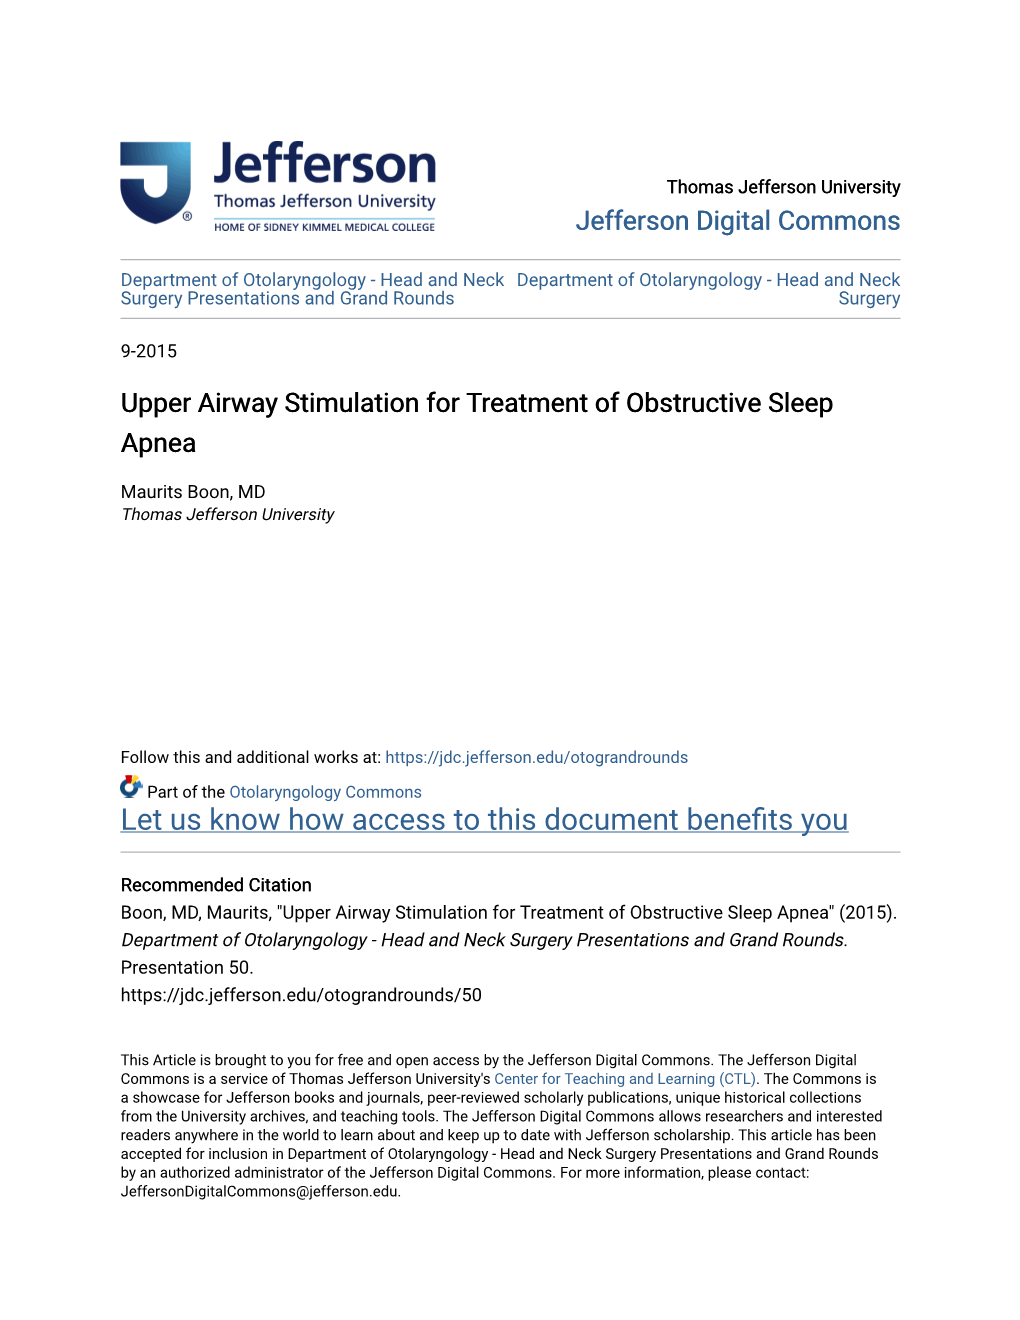 Upper Airway Stimulation for Treatment of Obstructive Sleep Apnea